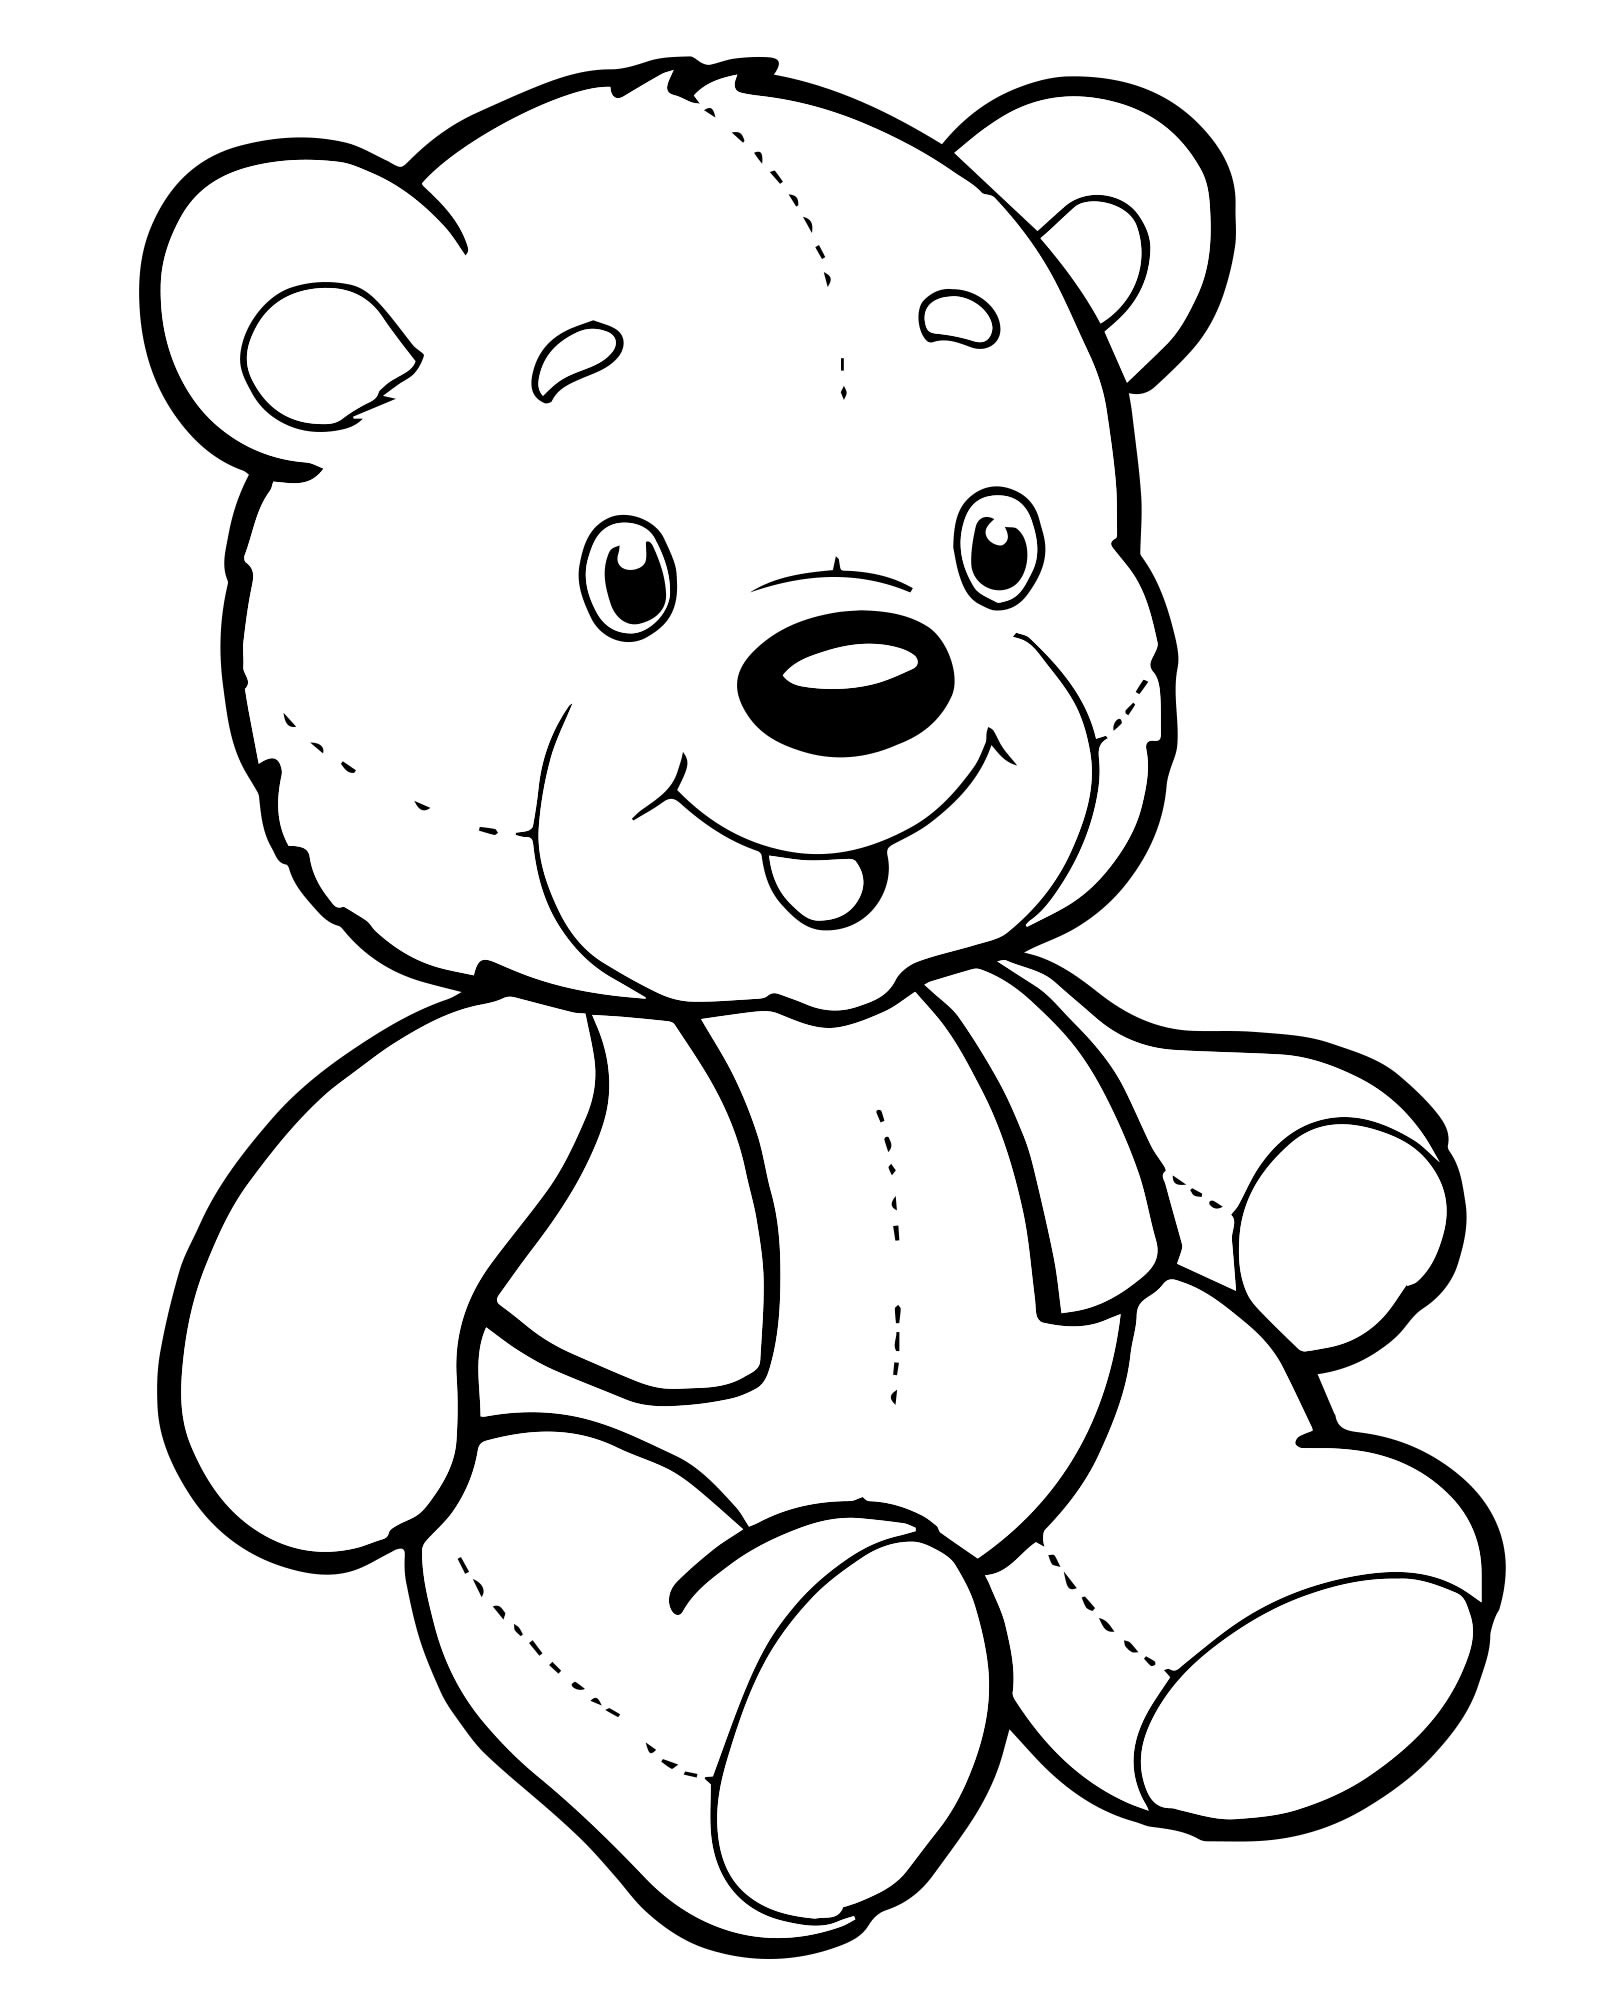 Раскраска игрушка картинка. Раскраска "мишки". Мишка раскраска для детей. Раскраска. Медвежонок. Медвежонок раскраска для детей.